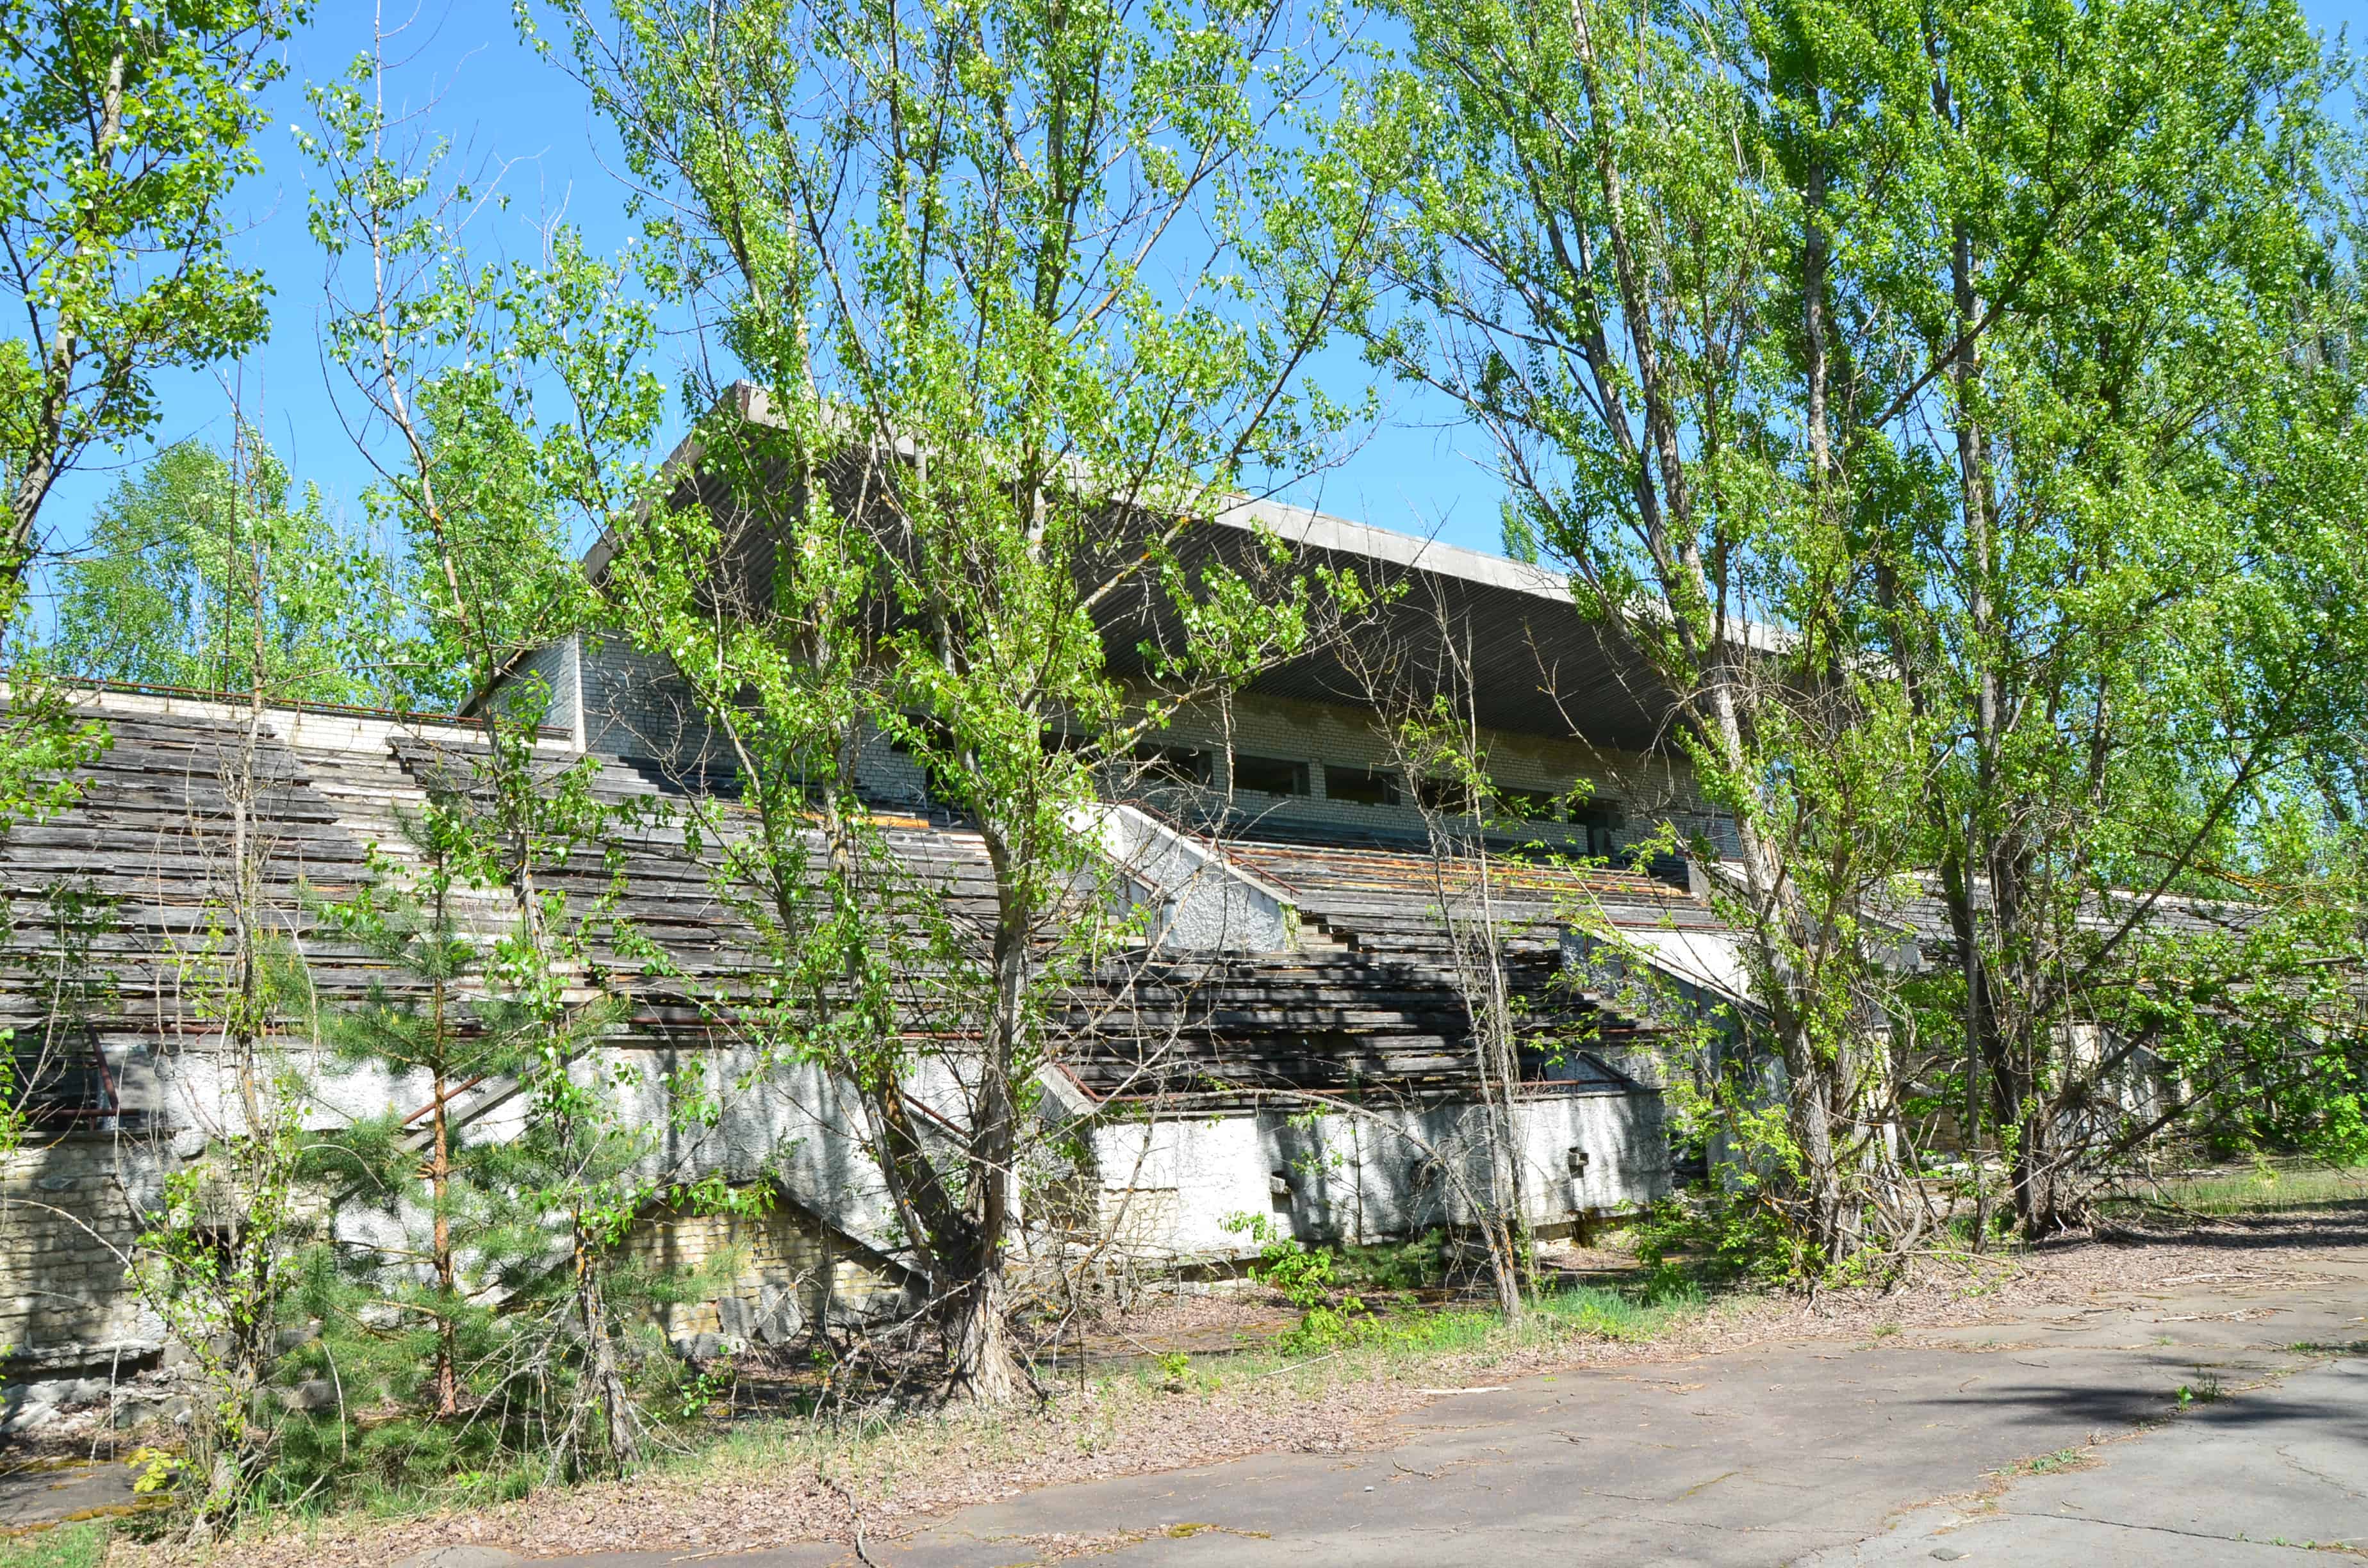 Stadium "Avangard" in Pripyat, Chernobyl Exclusion Zone, Ukraine